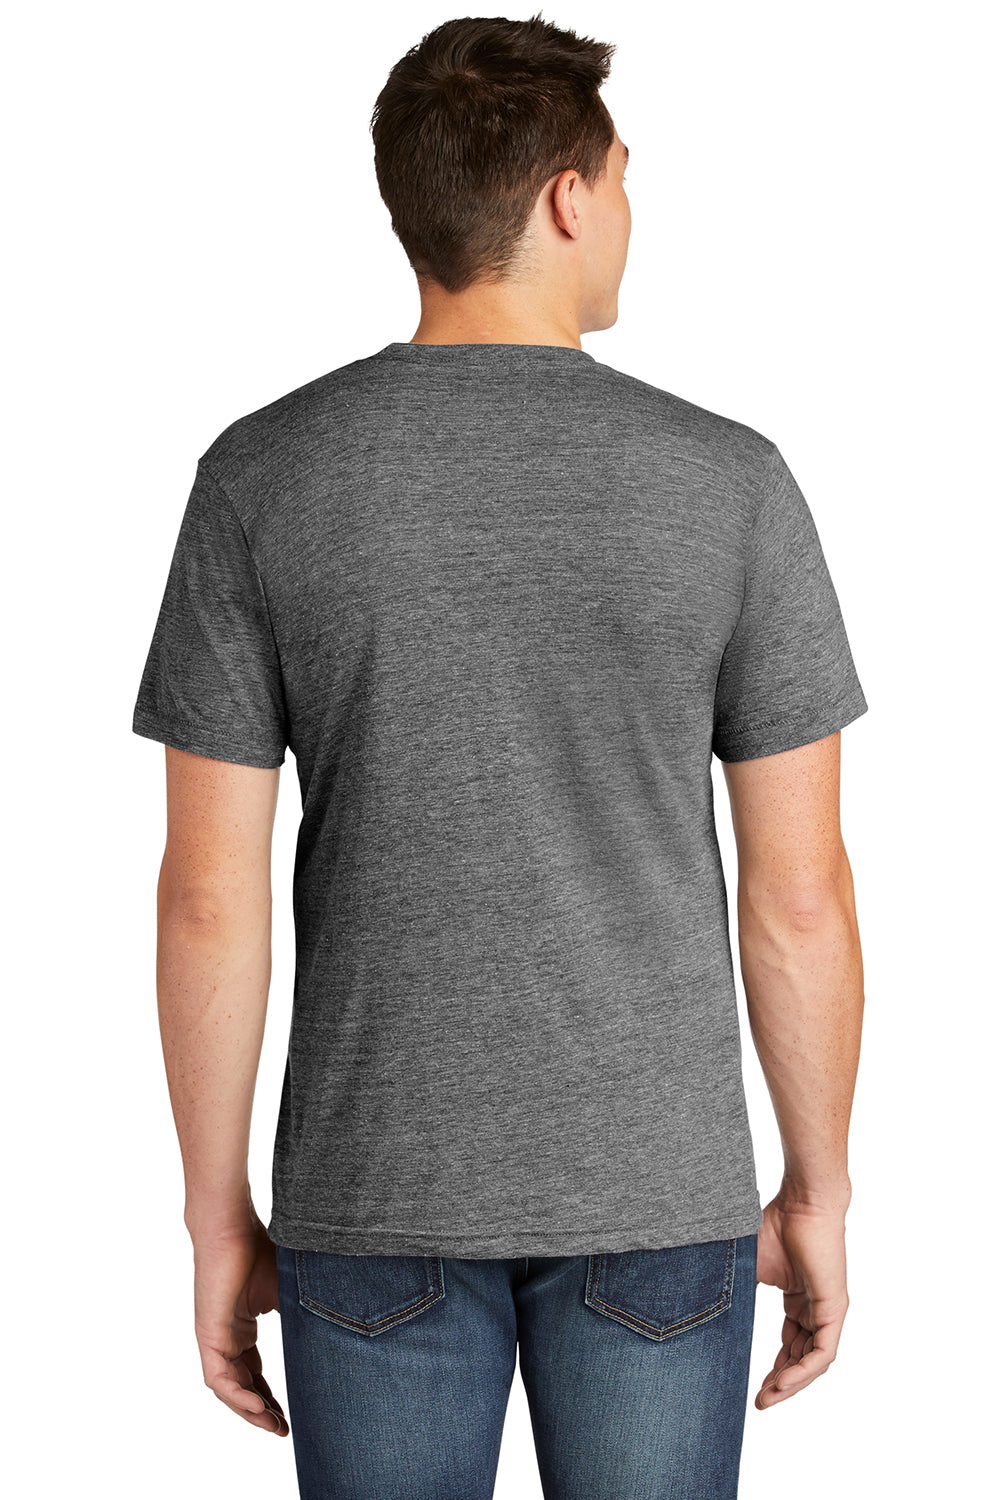 American Apparel TR401 Mens Track Short Sleeve Crewneck T-Shirt Athletic Grey Model Back